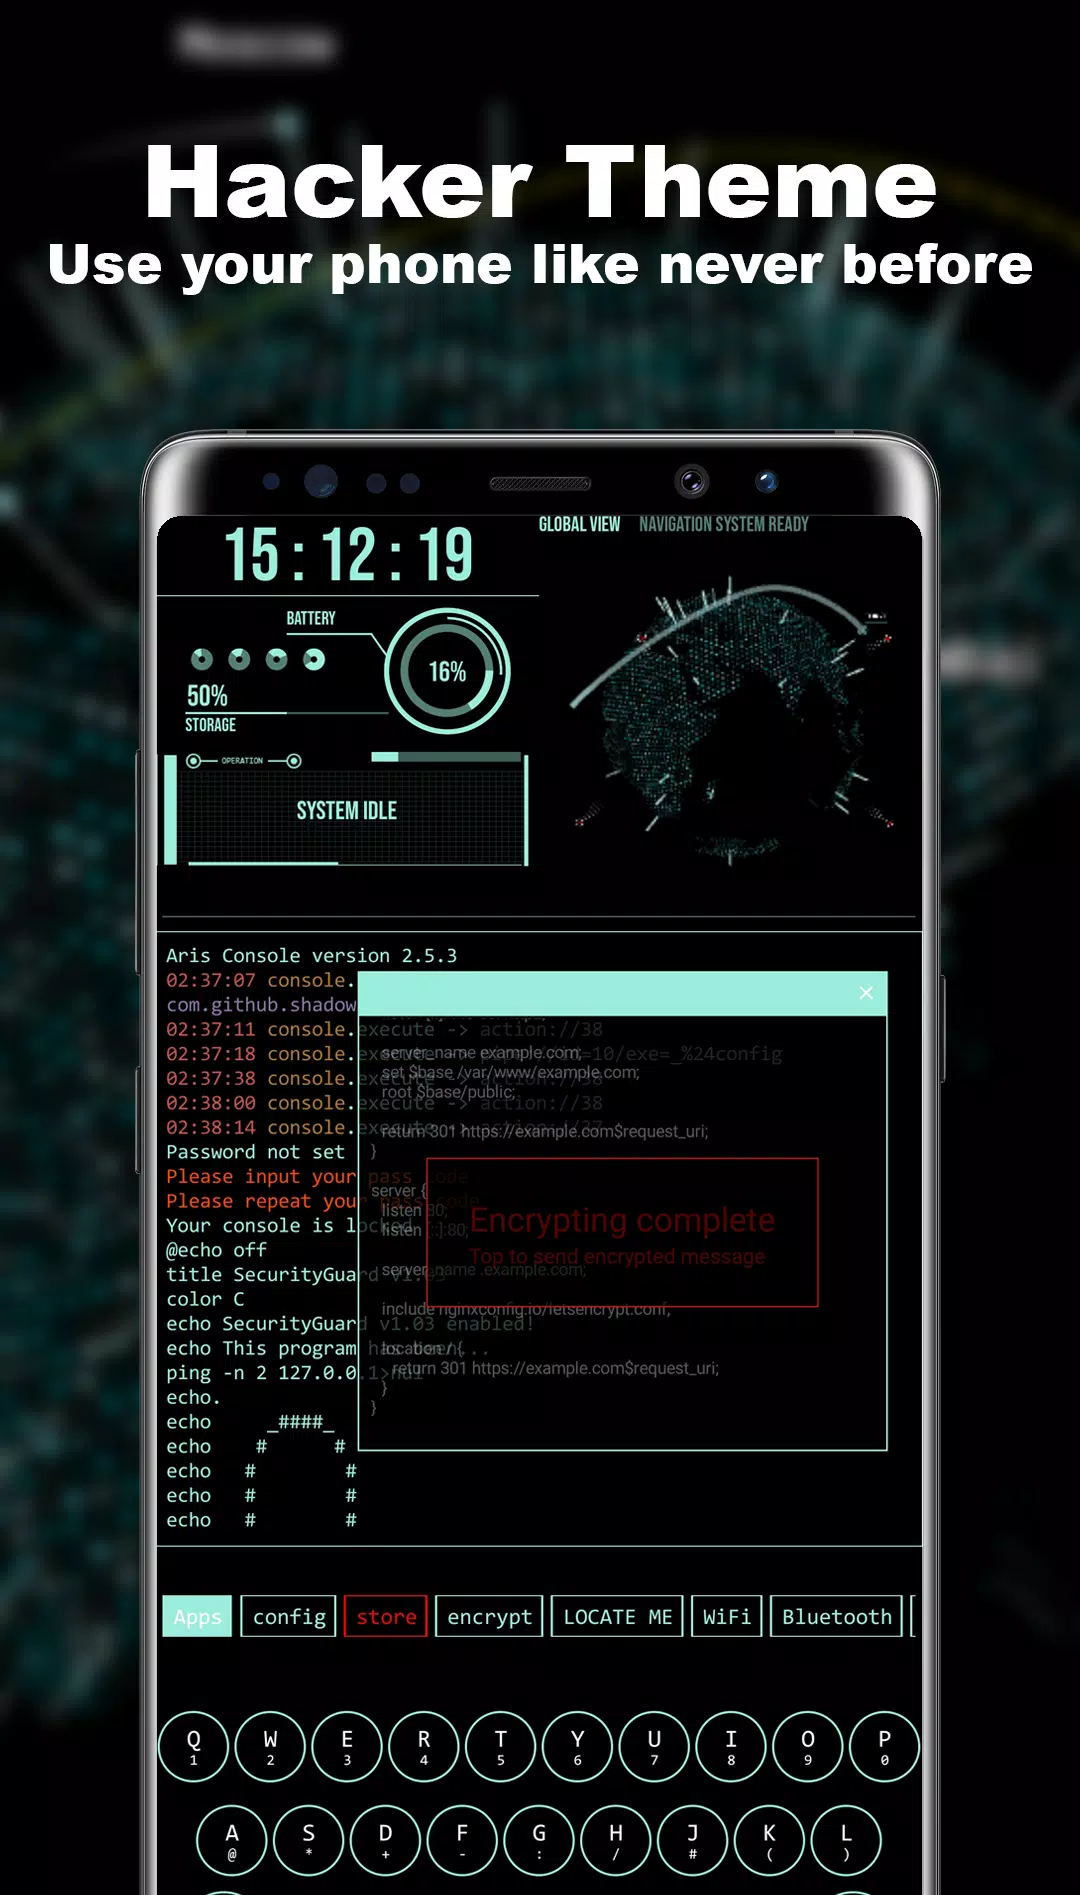 Hacker.exe - Mobile Hacking Simulator Free - Download do APK para Android